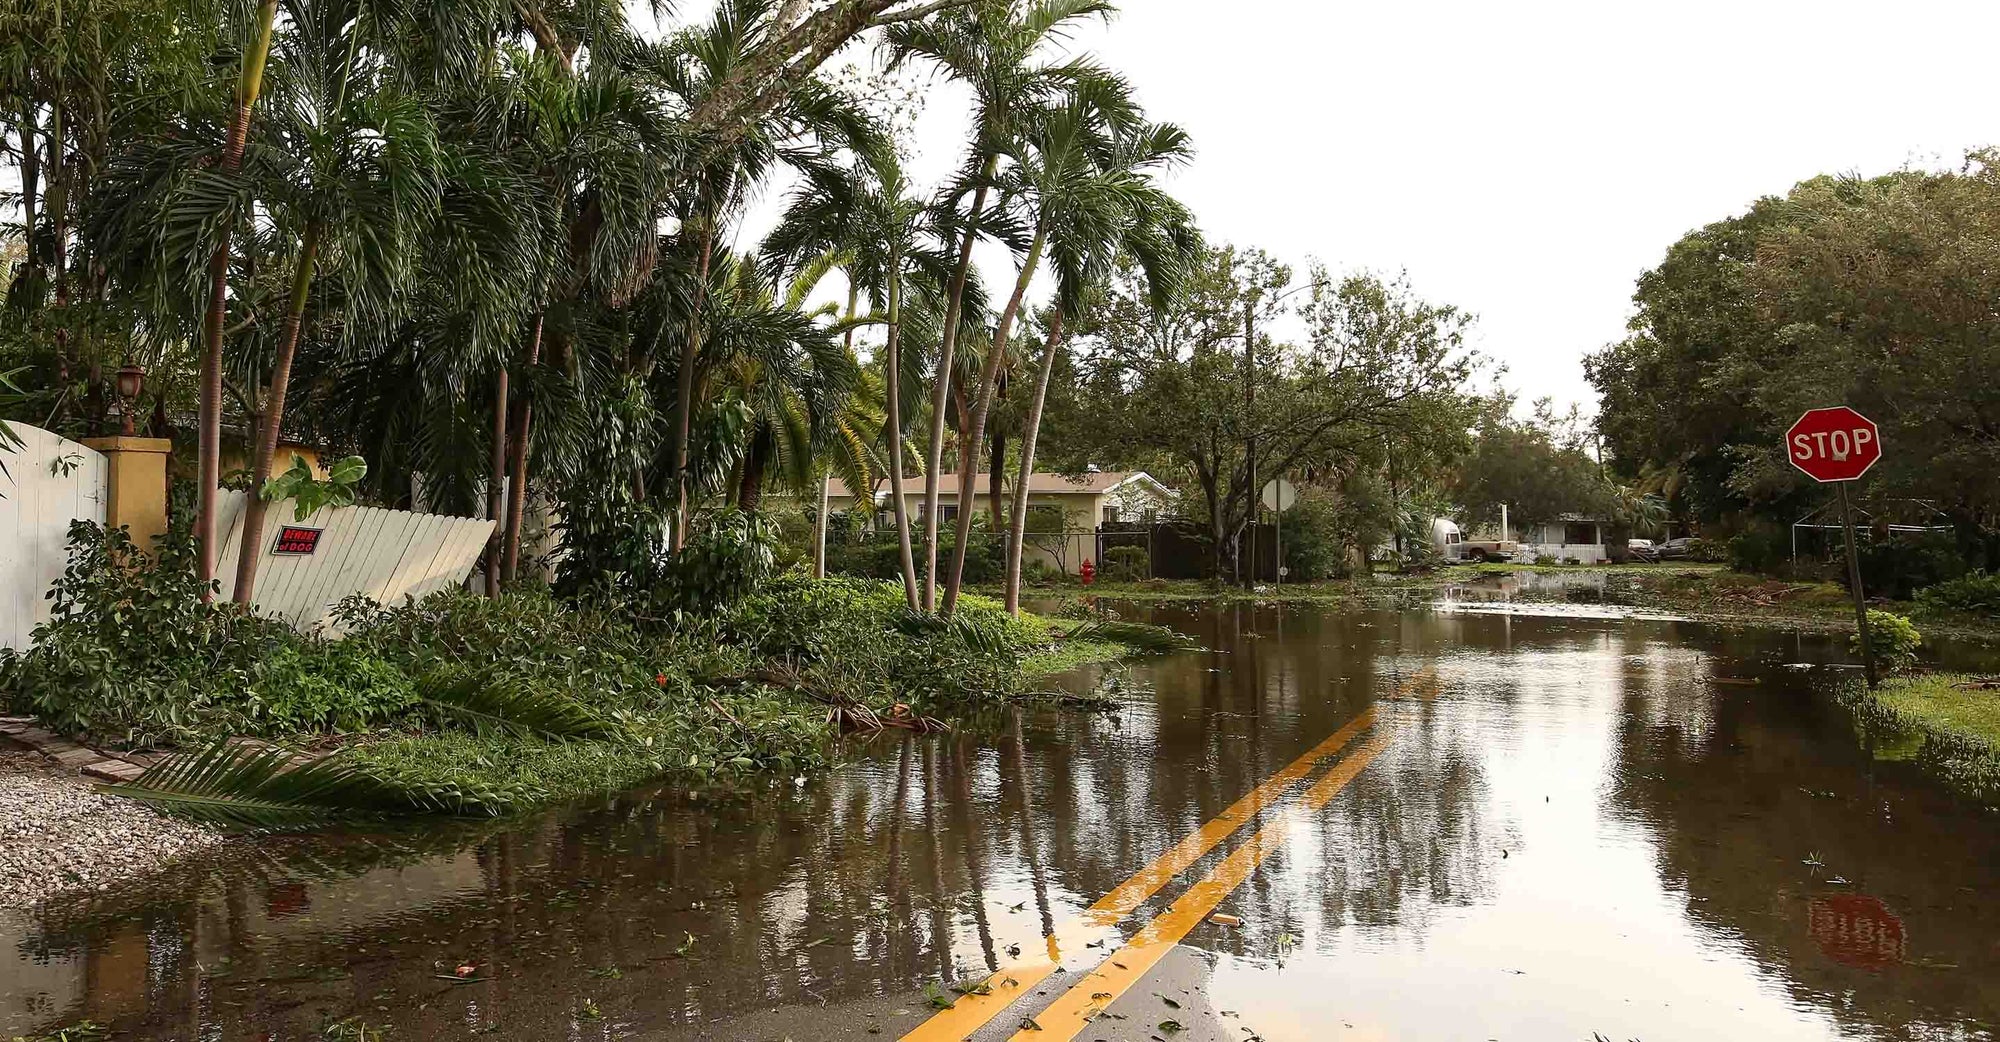 Flooding in Florida from Hurricane Idalia.